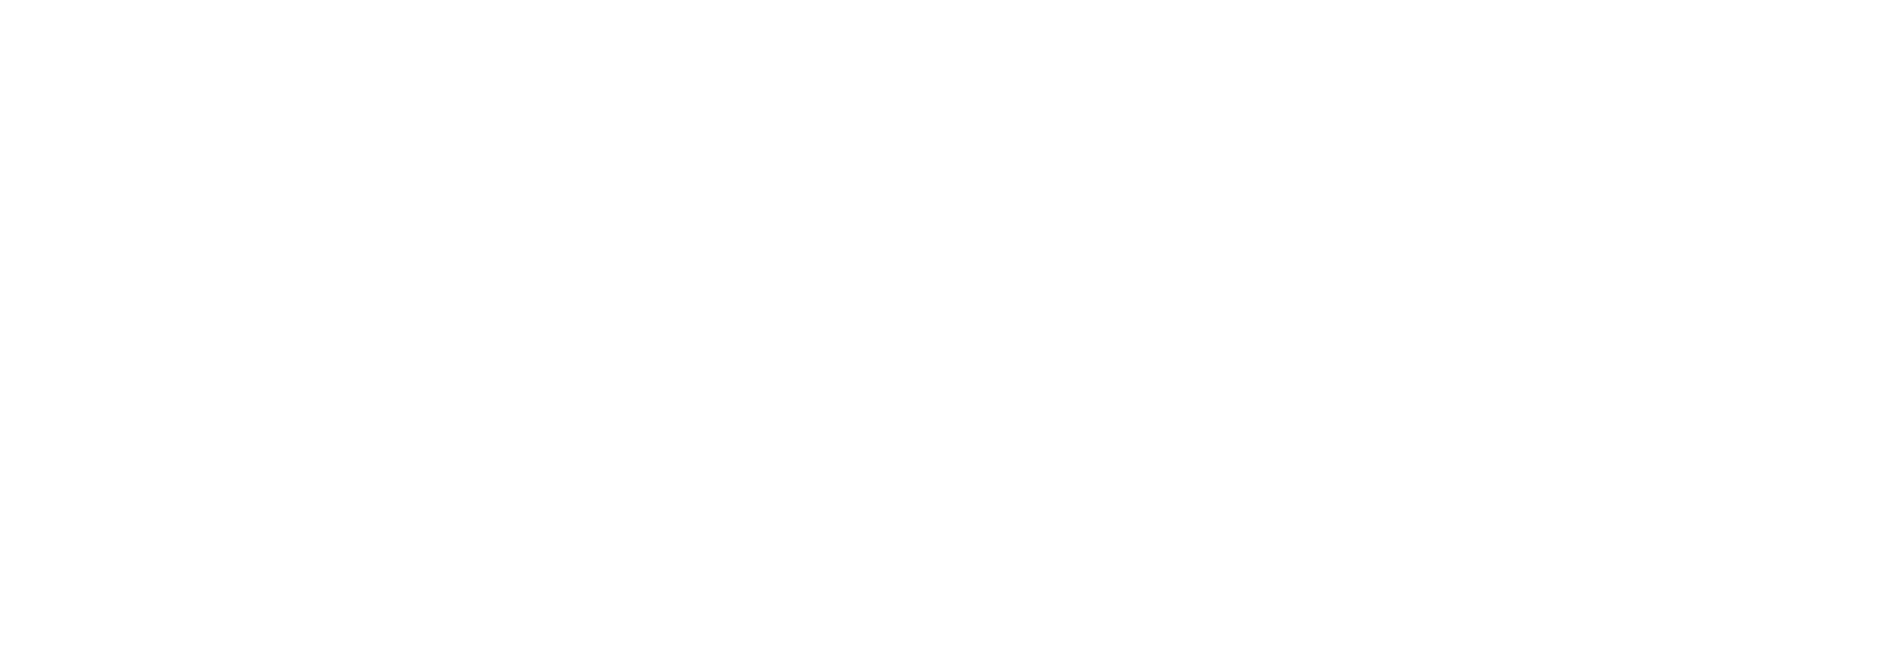 The Cleveland Show logo